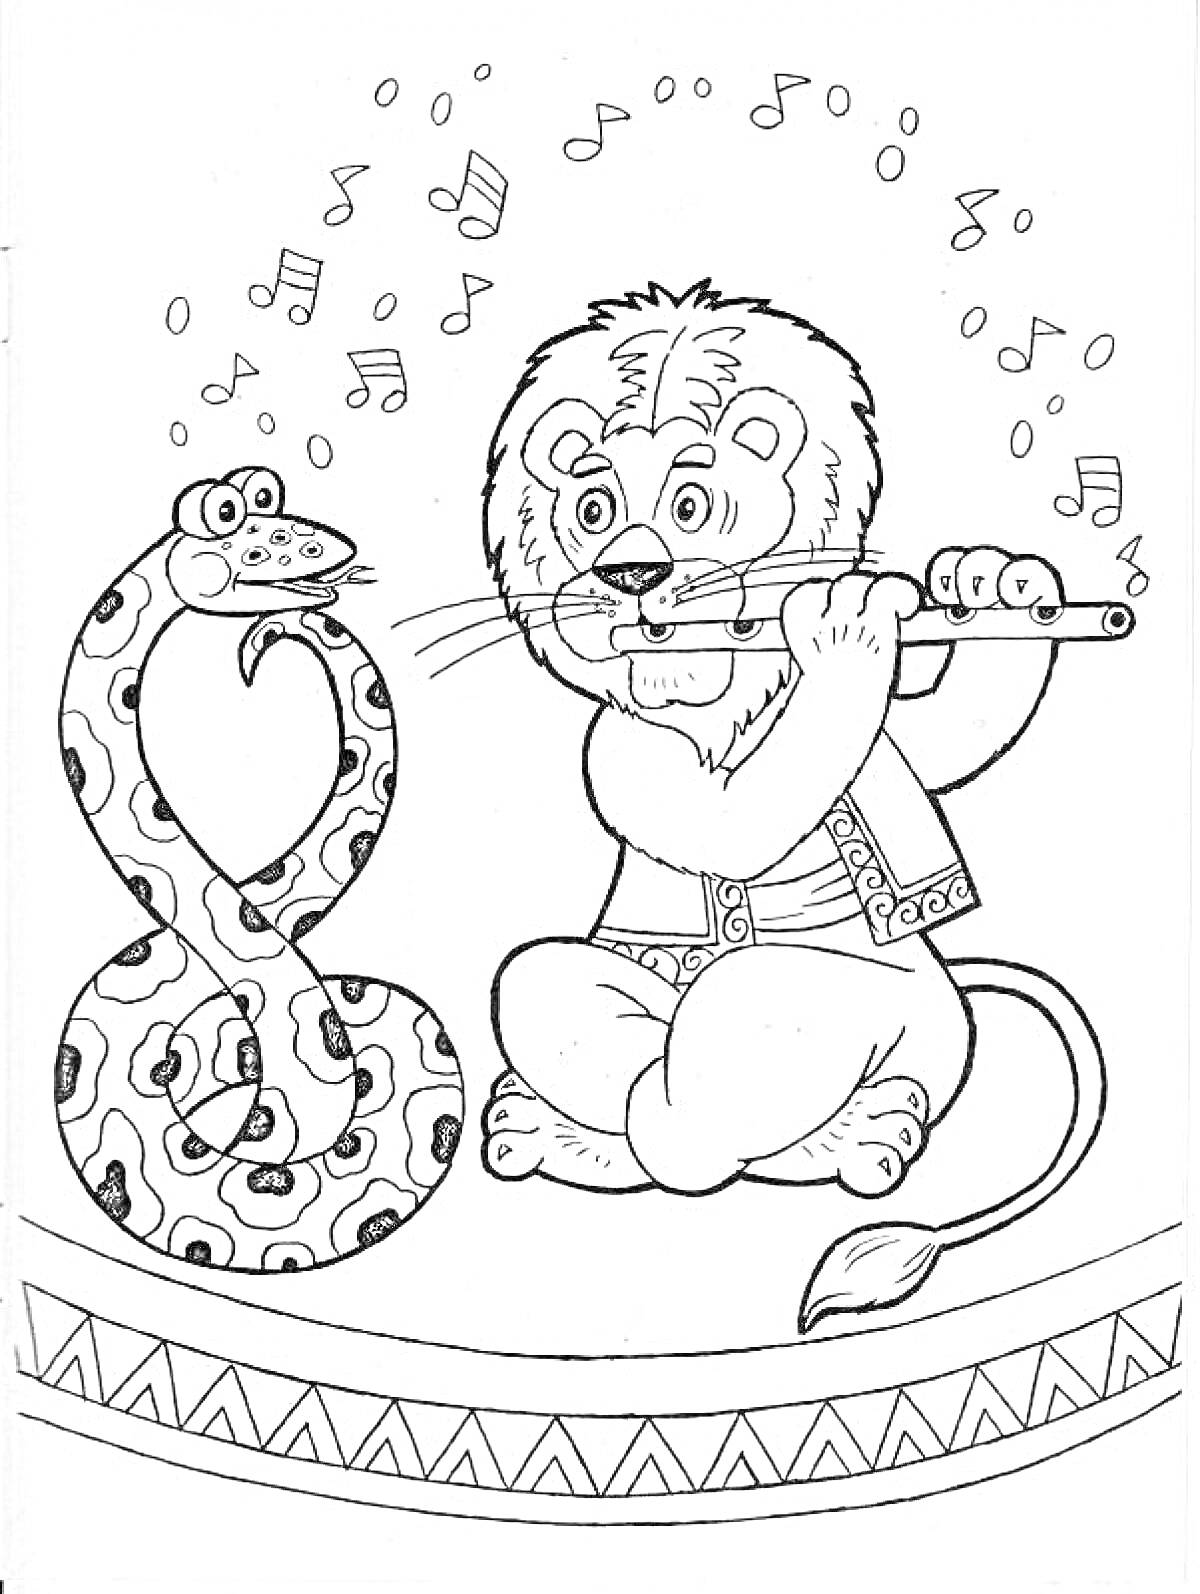 Раскраска Лев с флейтой и танцующая змея на цирковой арене с нотами вокруг